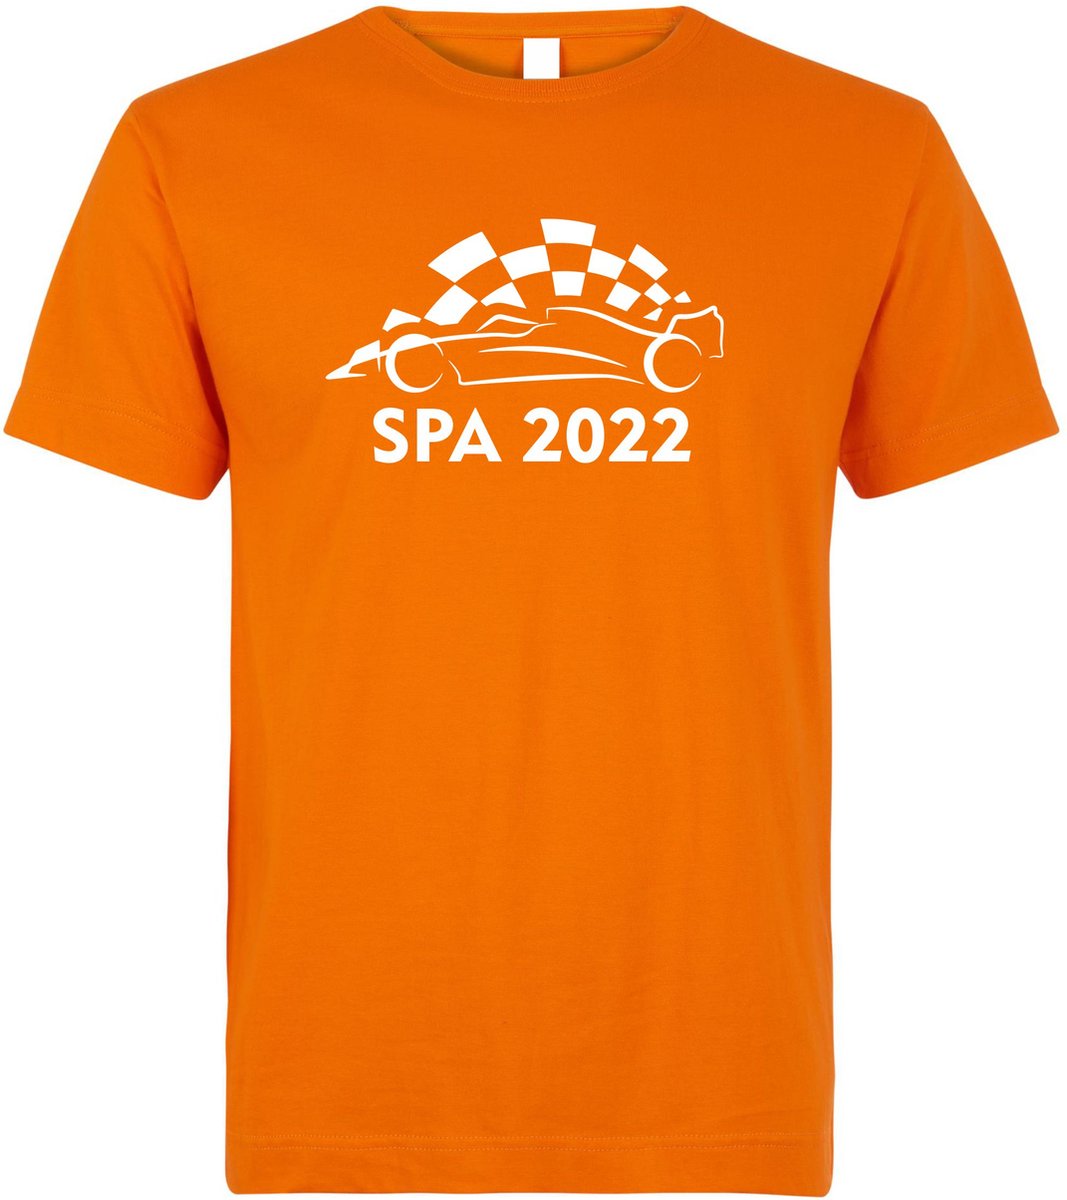 T-shirt kinderen Spa 2022 met raceauto | Max Verstappen / Red Bull Racing / Formule 1 fan | Grand Prix Circuit Spa-Francorchamps | kleding shirt | Oranje | maat 92